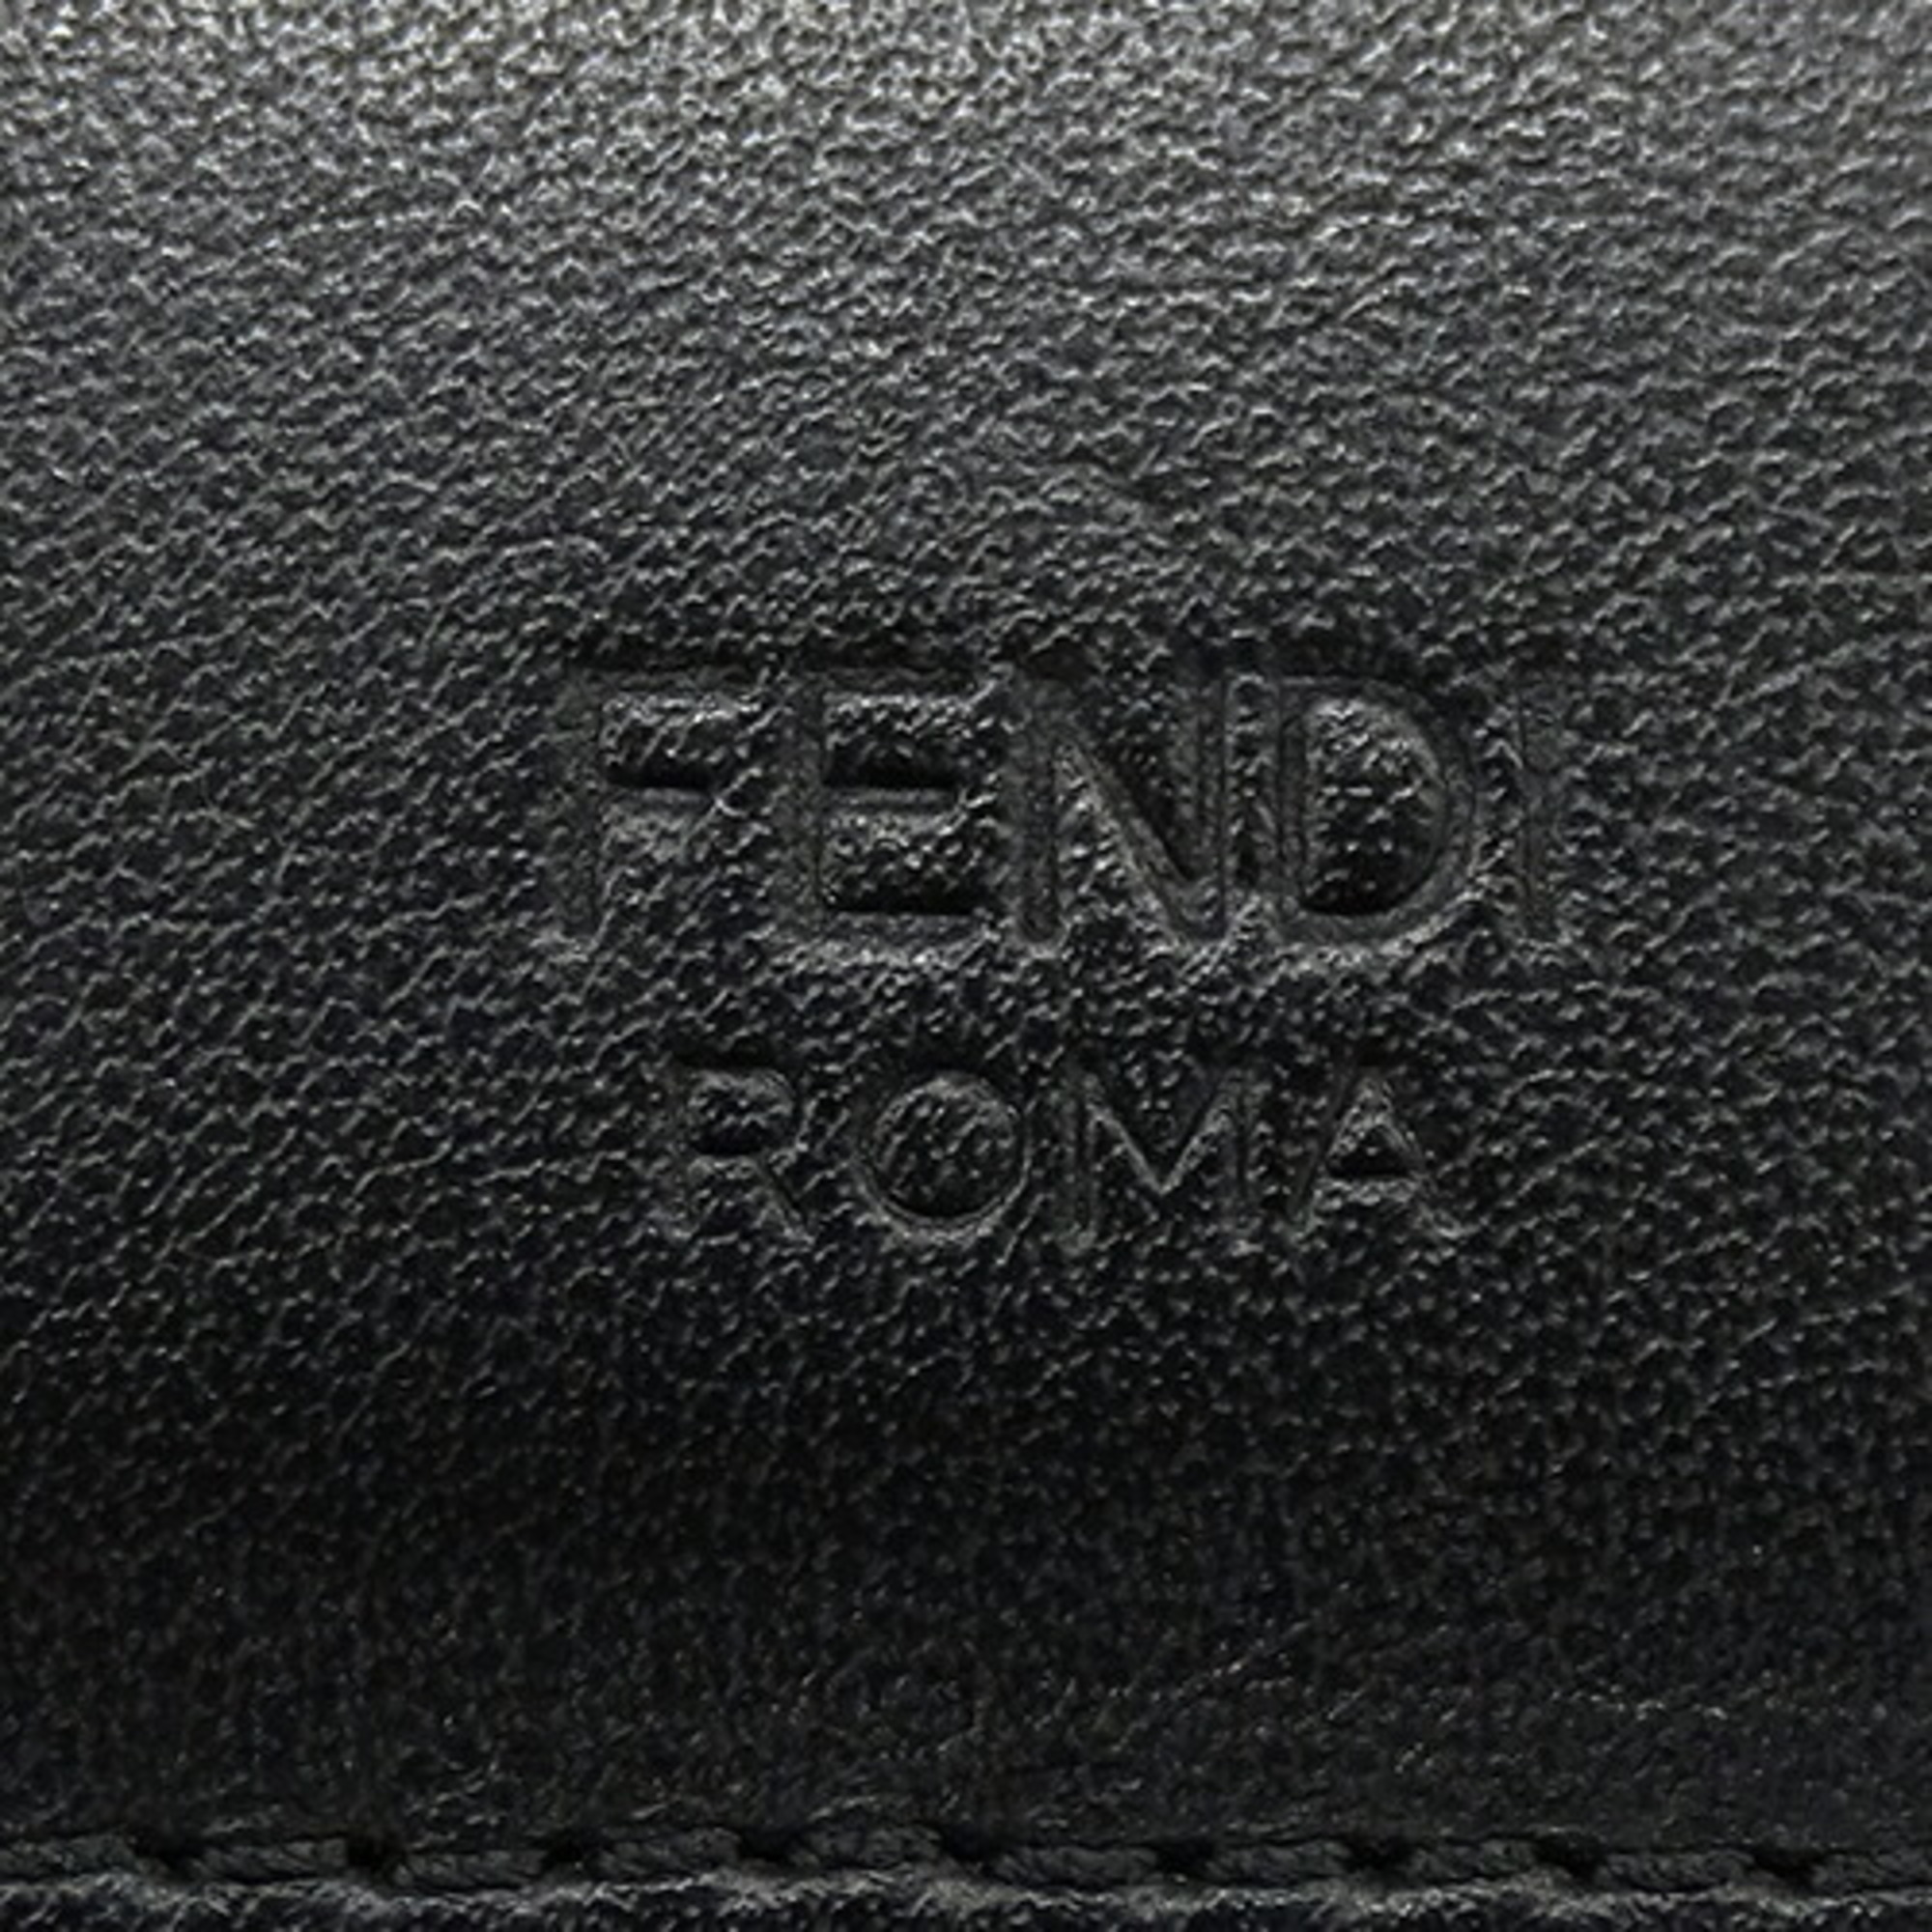 FENDI Wallet Women's Men's Brand Bifold Leather Monster Black Red 7M0169 No Coin Purse